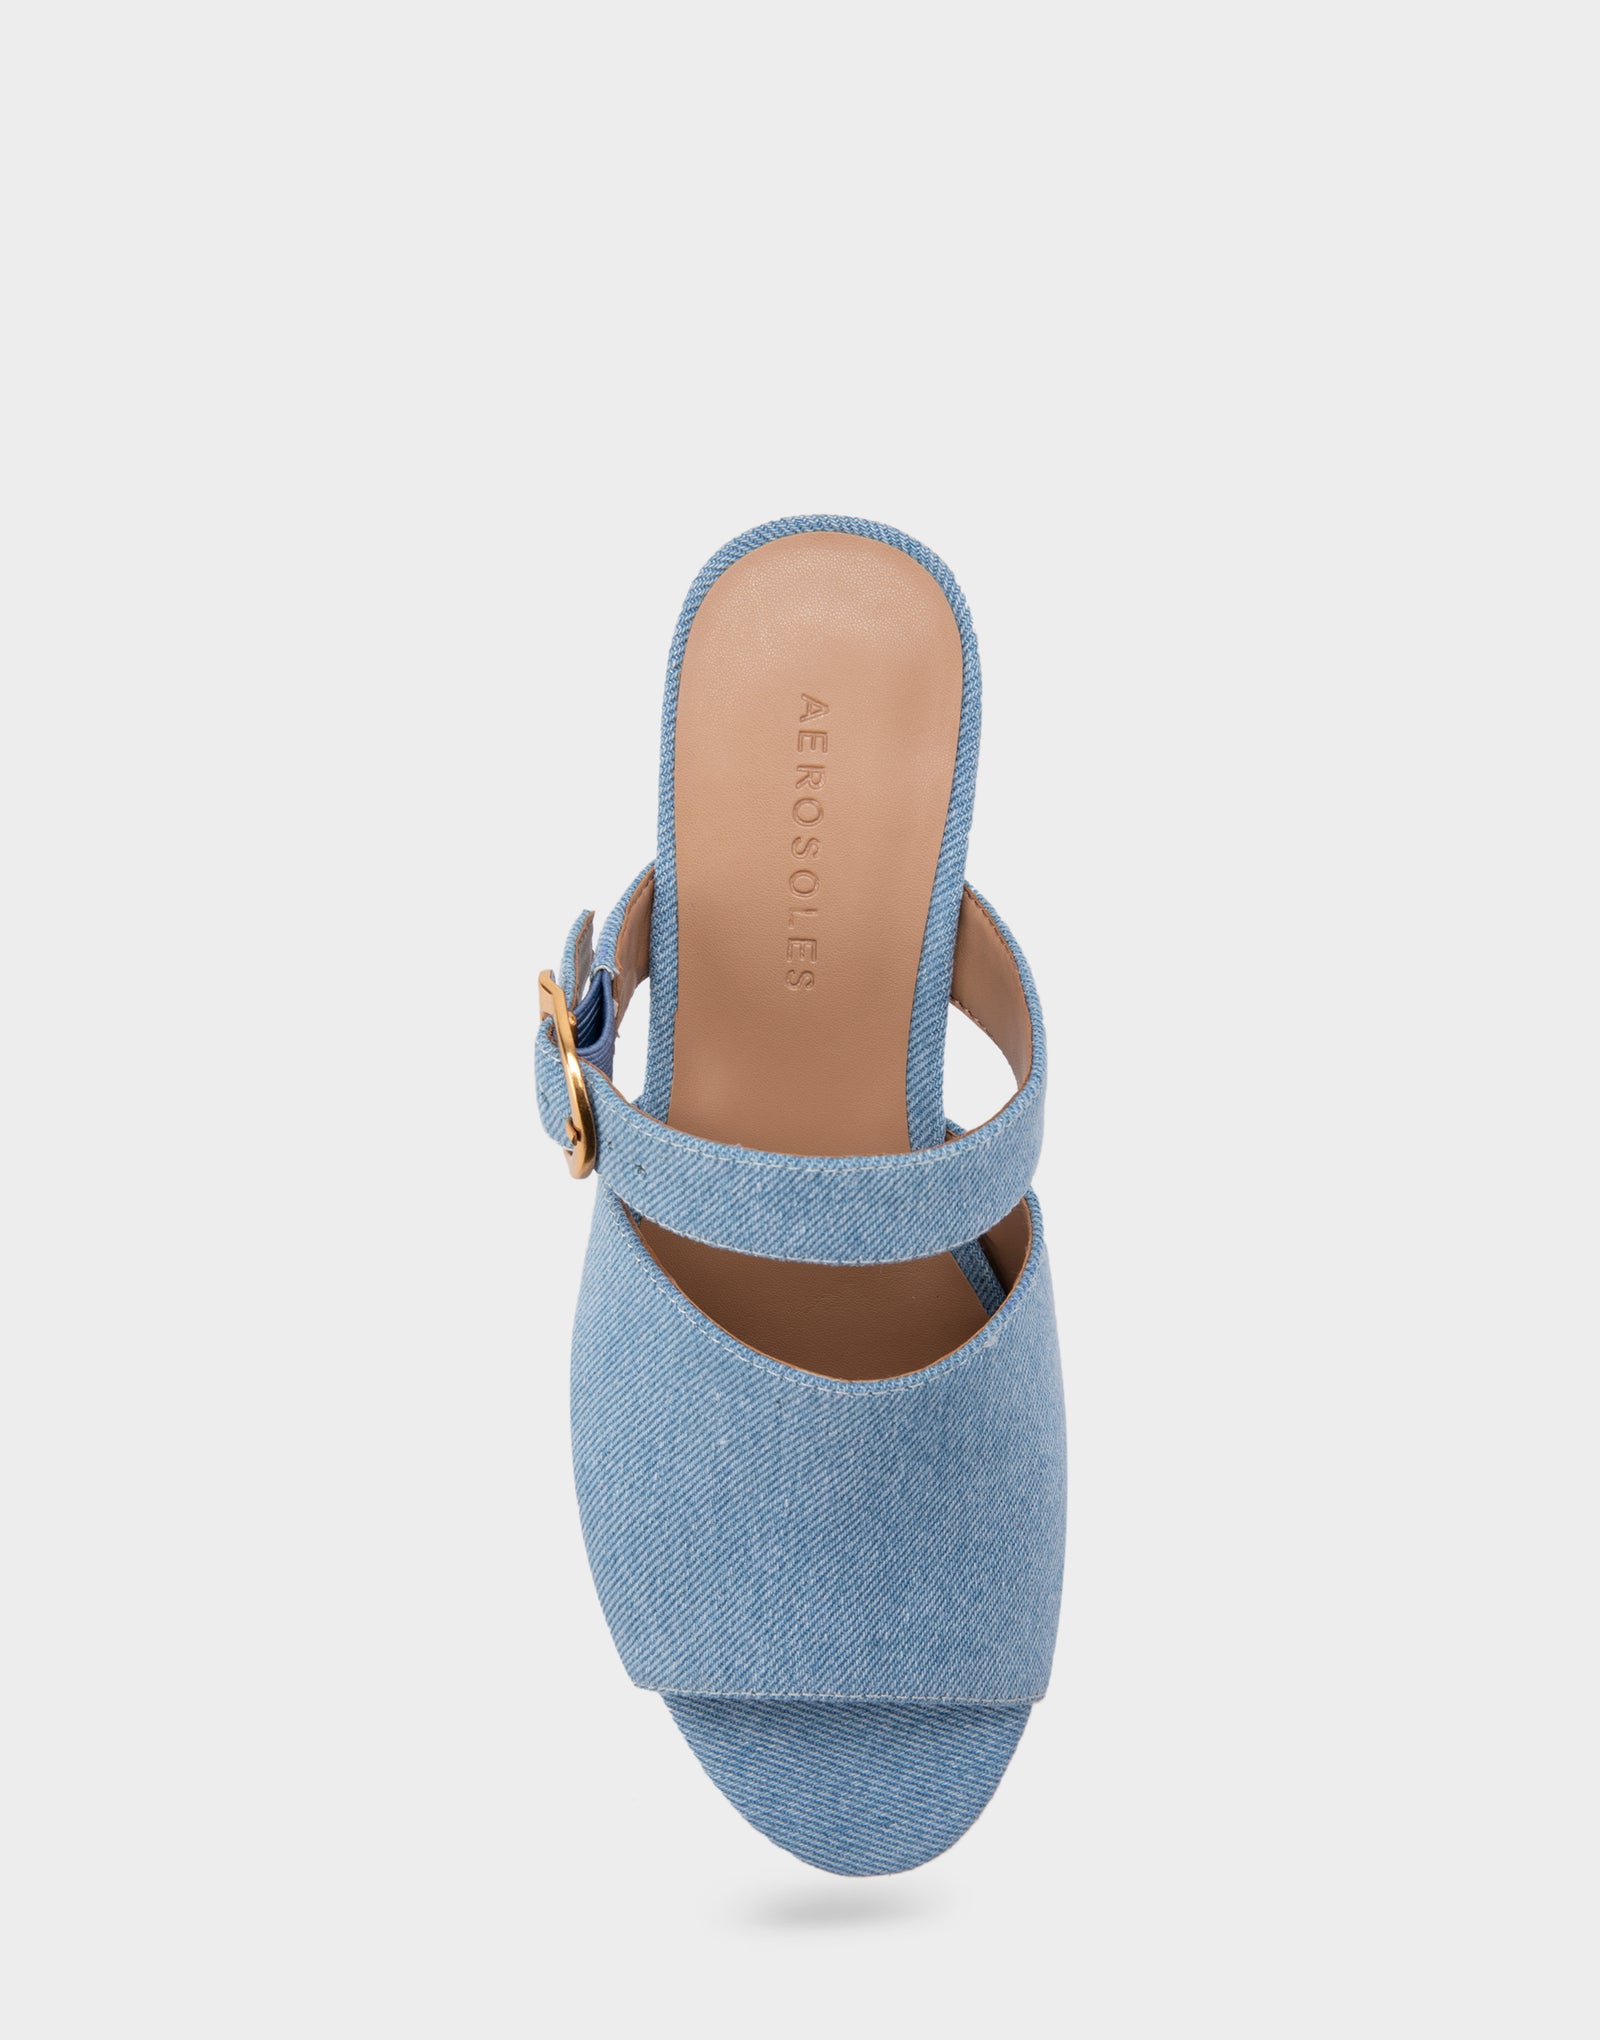 Women's Platform Sandal in Blue